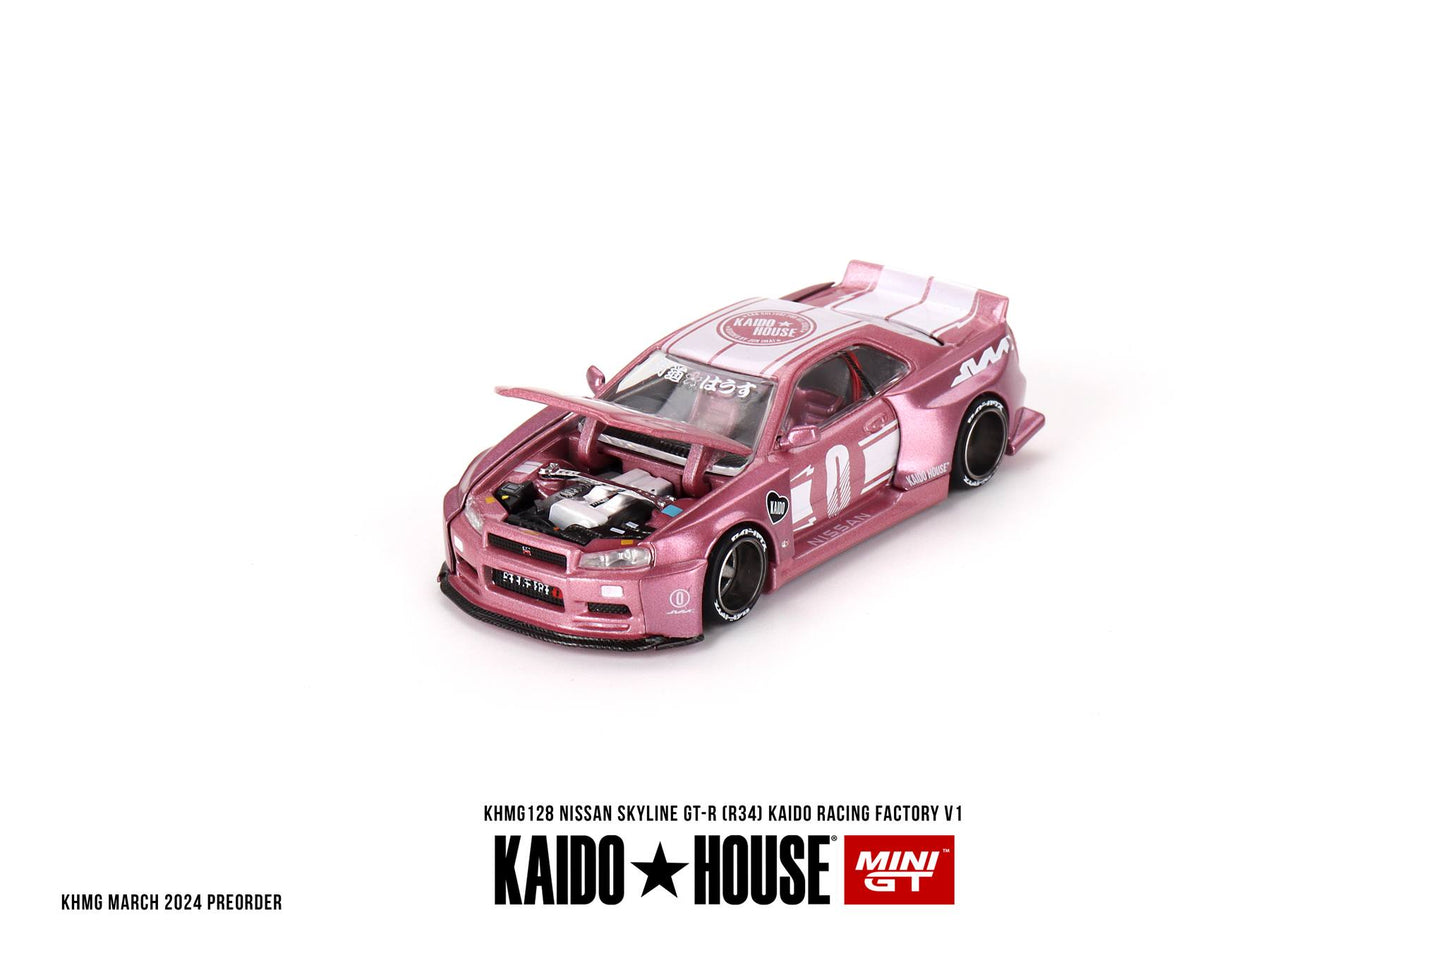 Mini GT x Kaido House Nissan Skyline GT-R (R34) Kaido Racing Factory V1